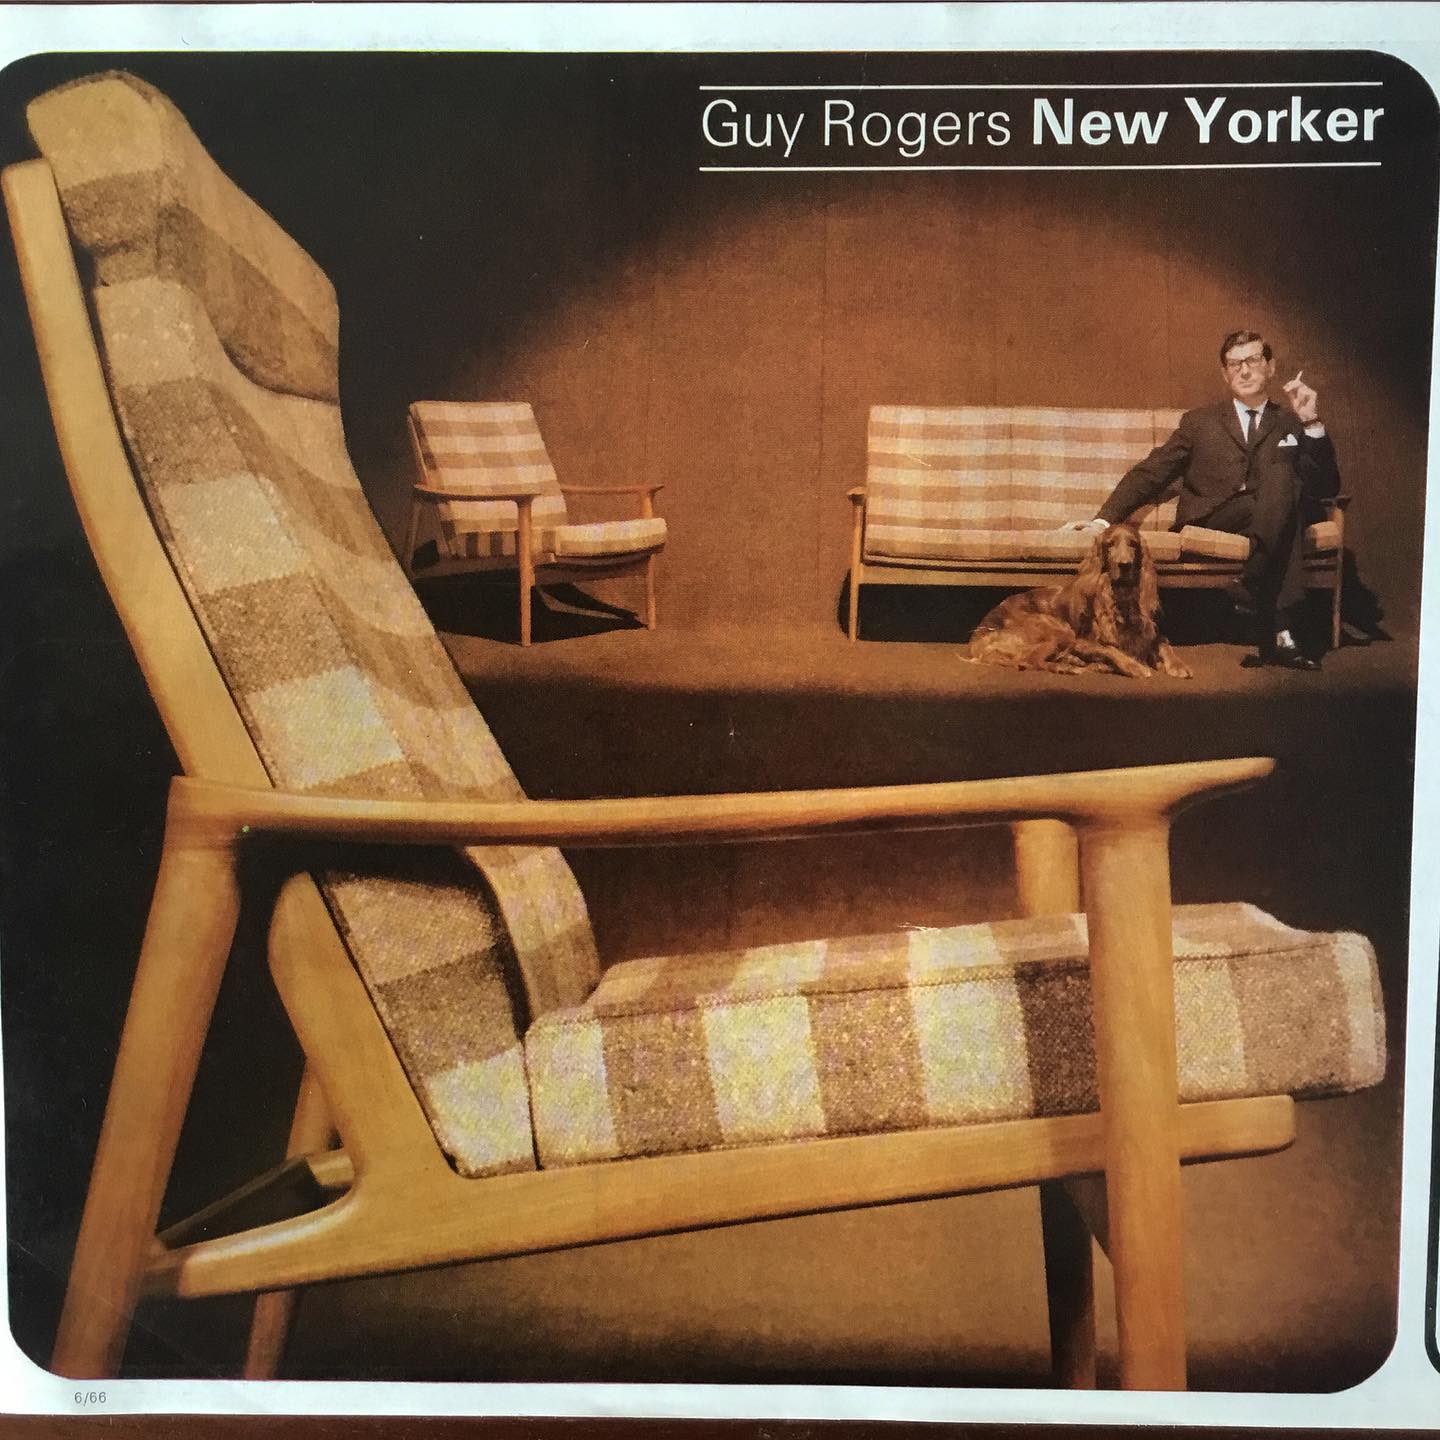 1617619526-guy-rogers-new-yorker-easy-chair-advert-FB.jpg